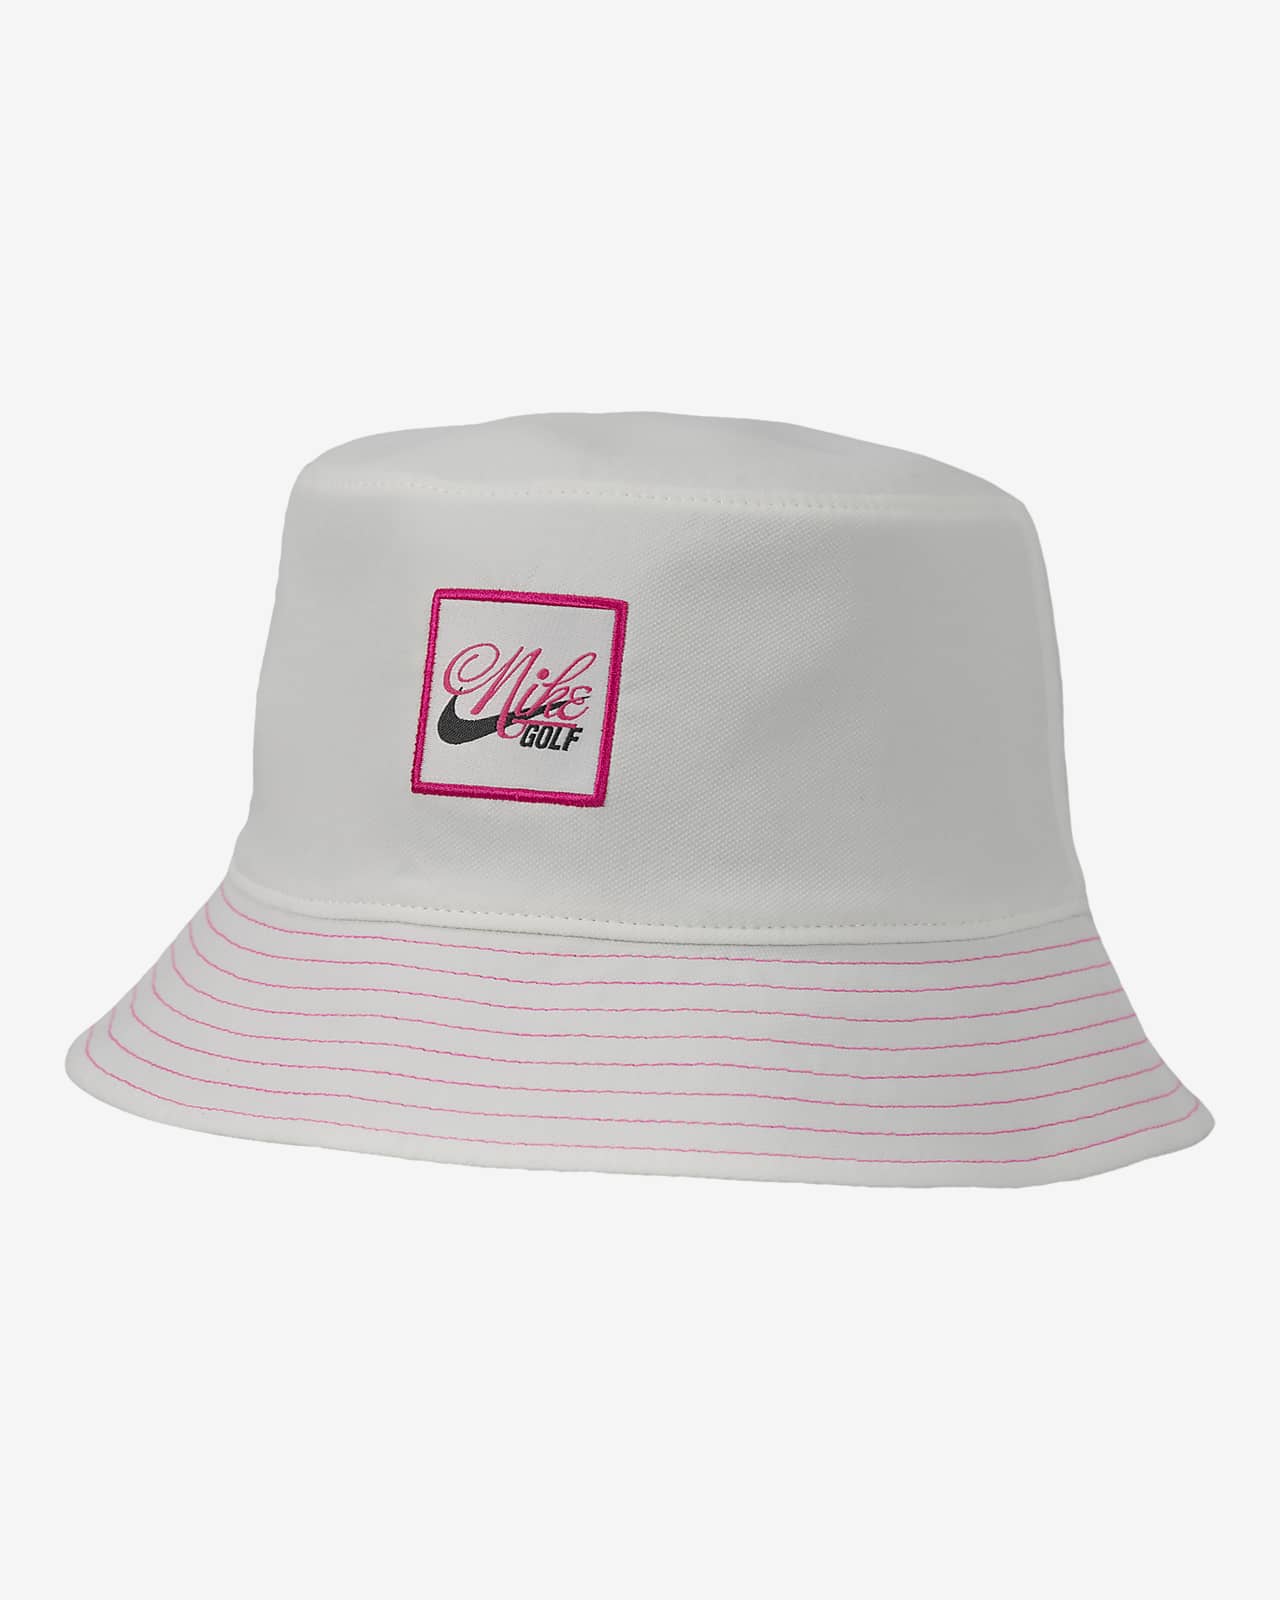 Nike Golf Reversible Bucket Hat.